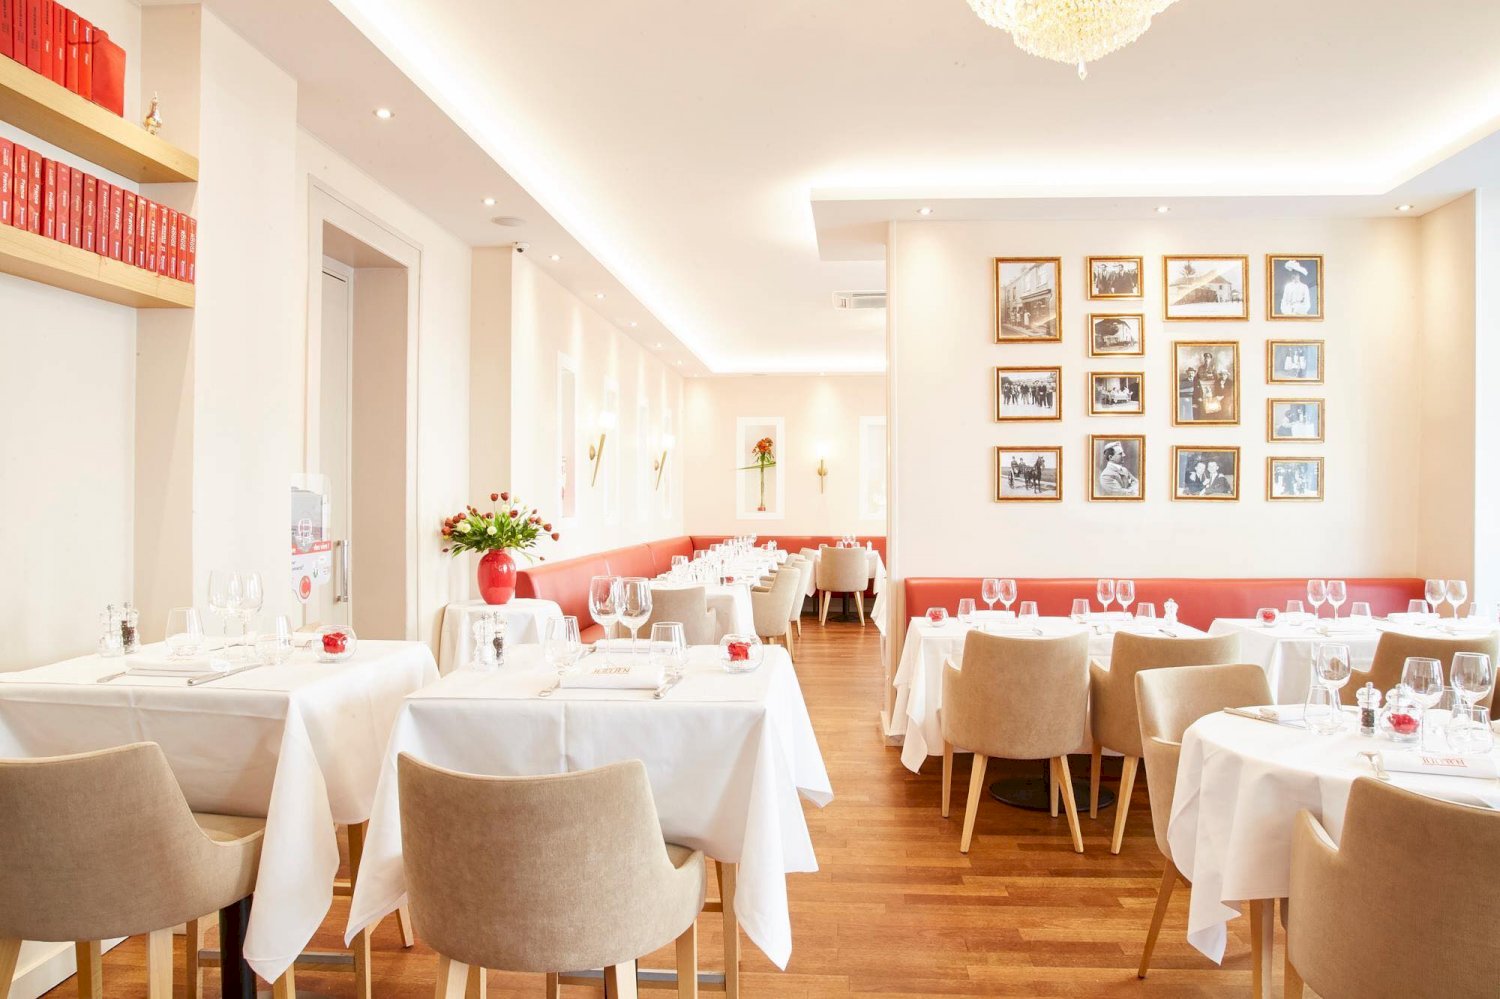 article good for events - Brasserie Jullien - Restaurant - Menu